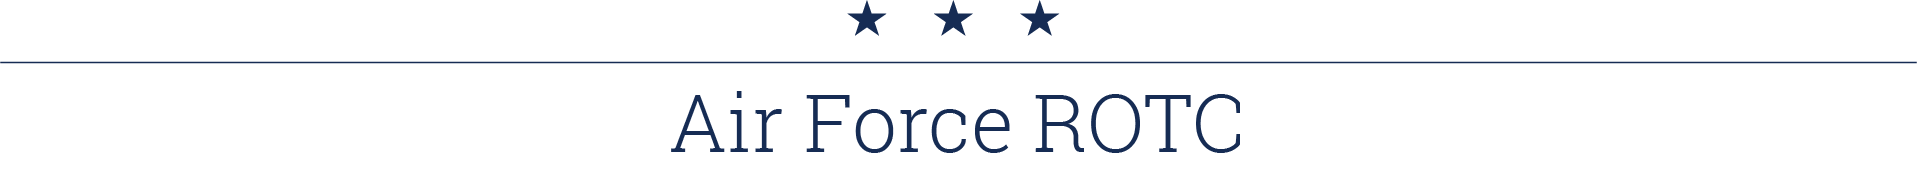 Air Force ROTC graduates